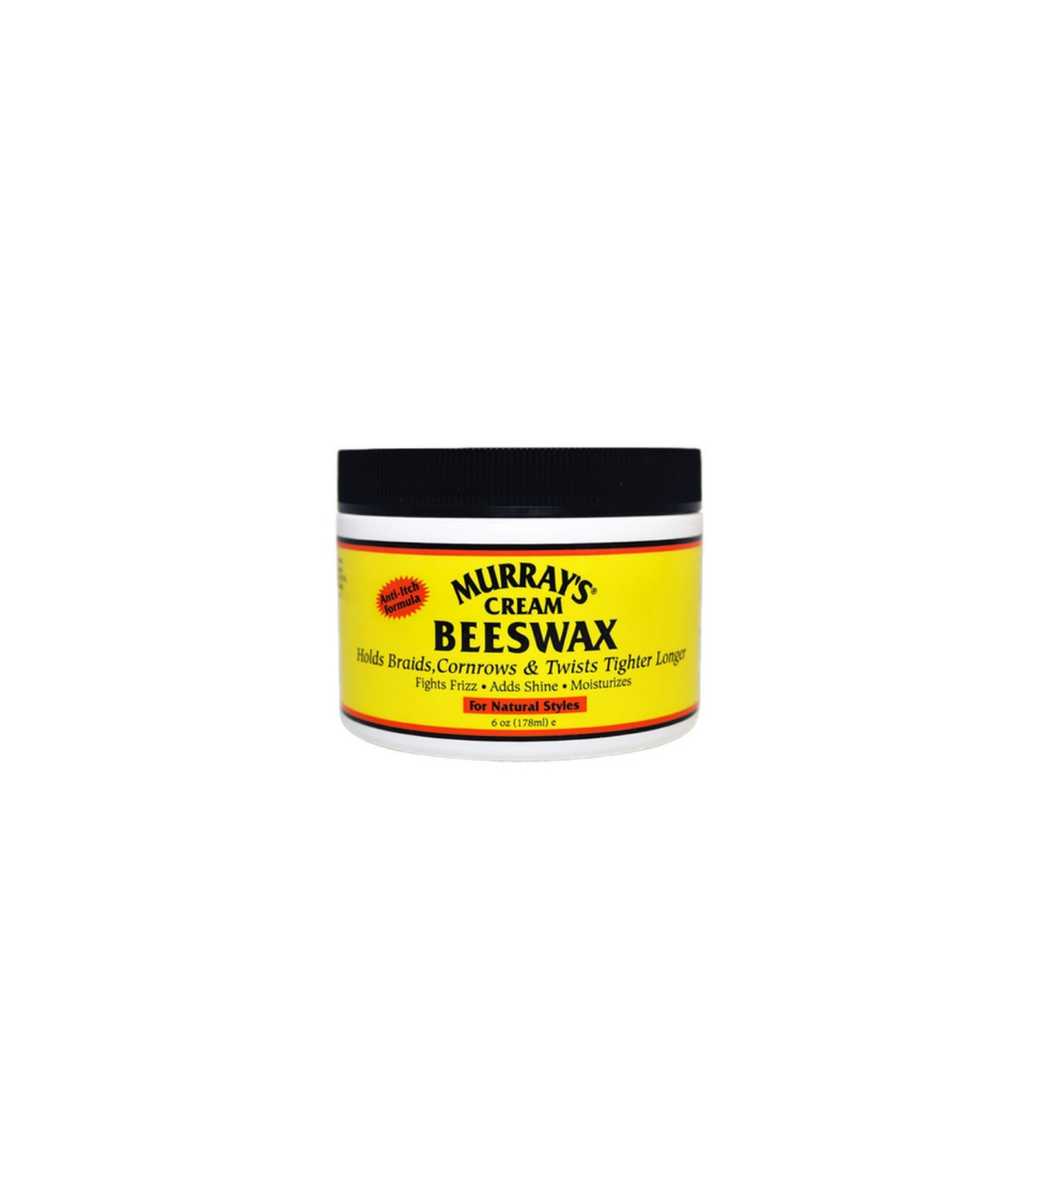 MURRAY'S Murray's Beeswax Hair Cream, 6oz -MU26800